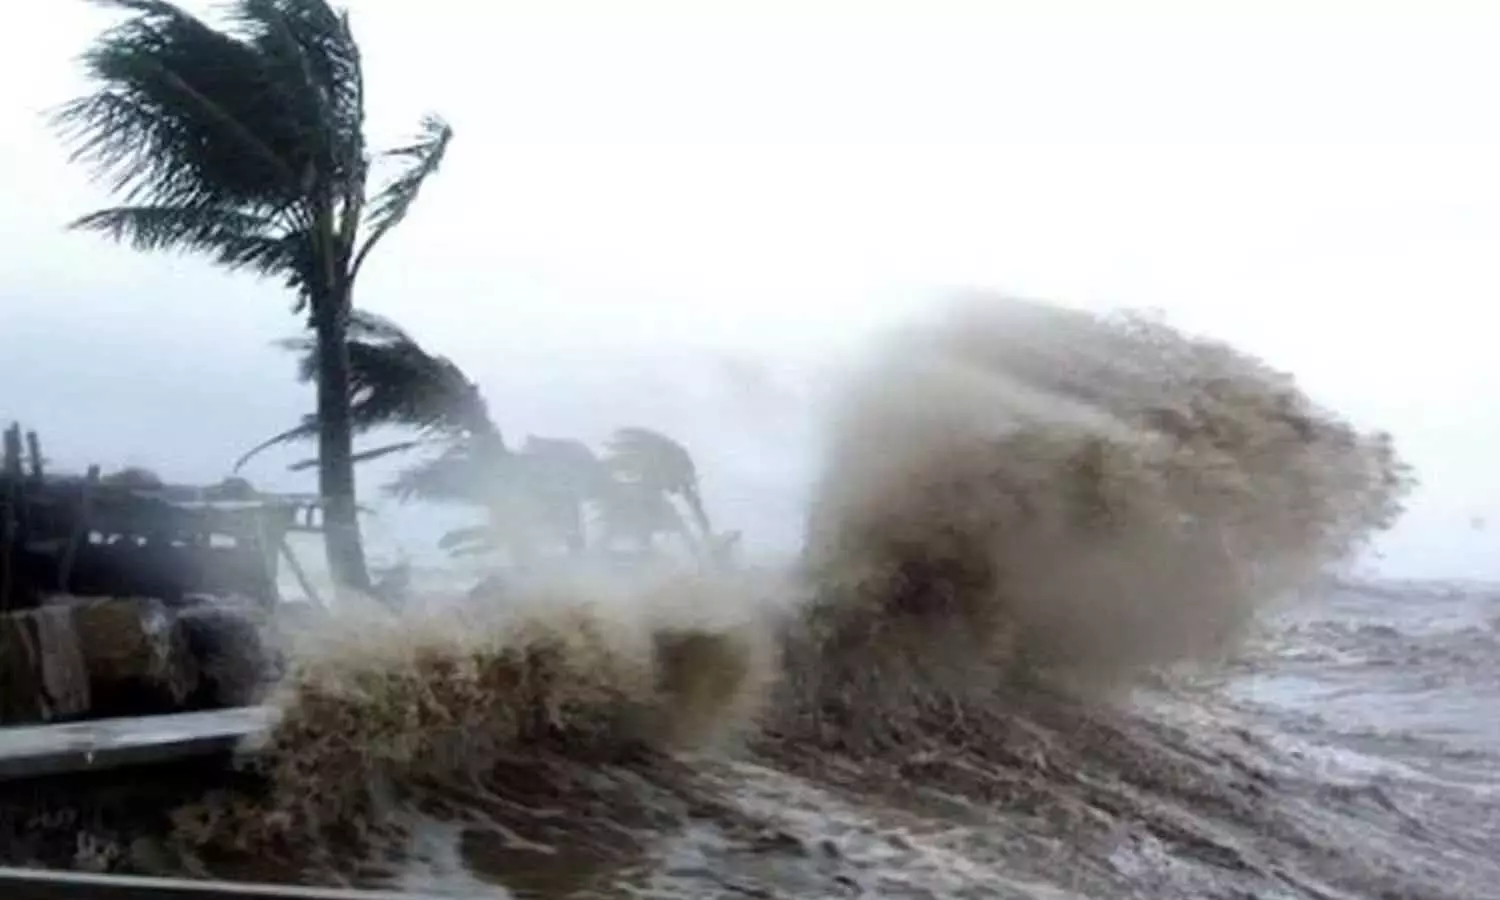 Cyclone Yaas